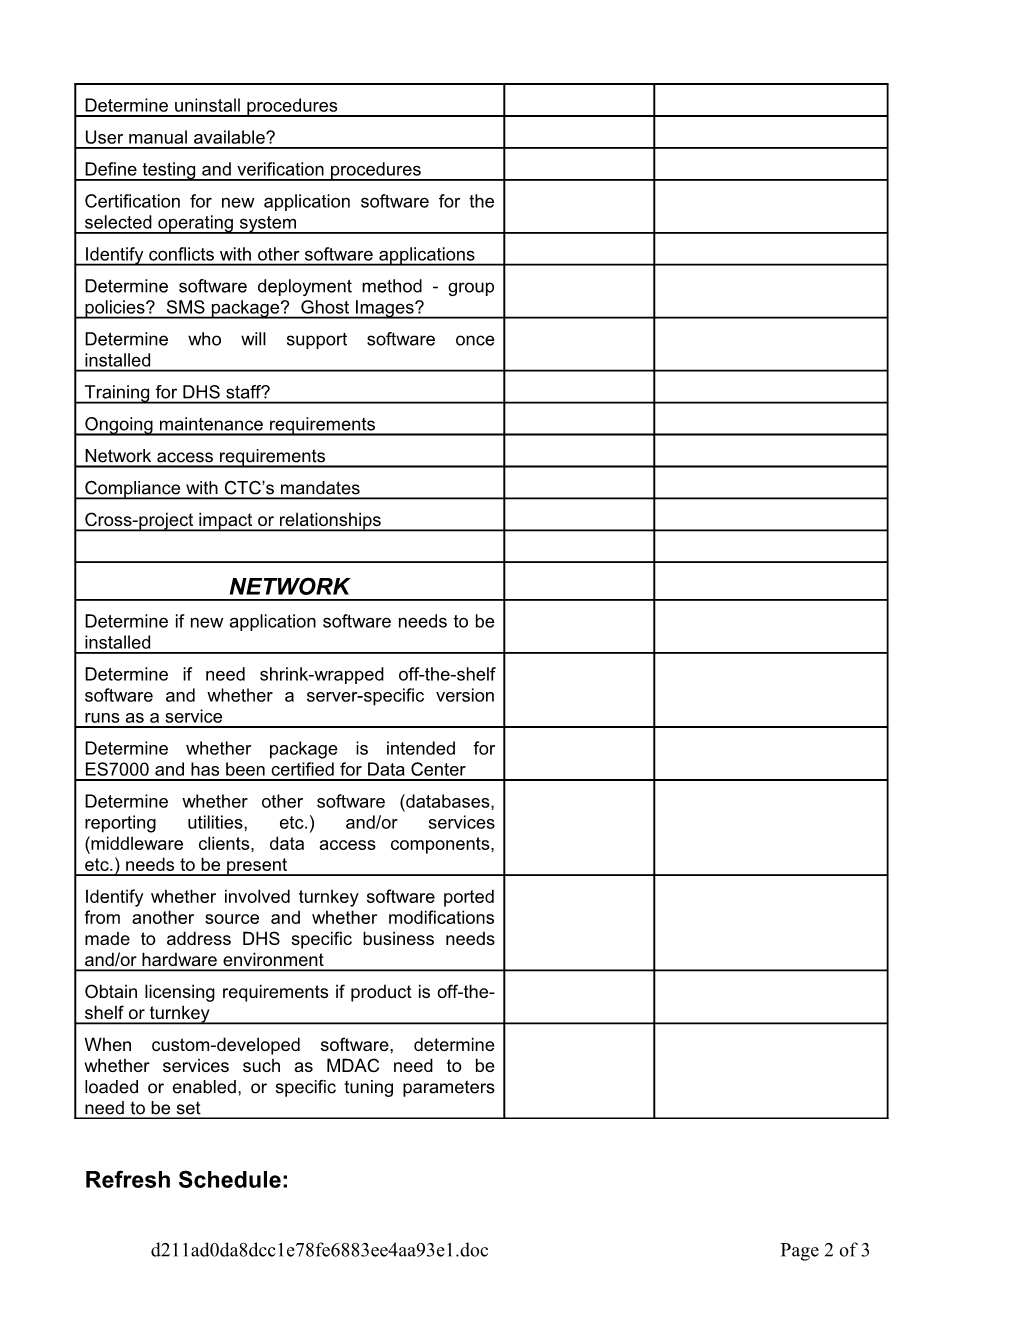 Software Requirements Checklist